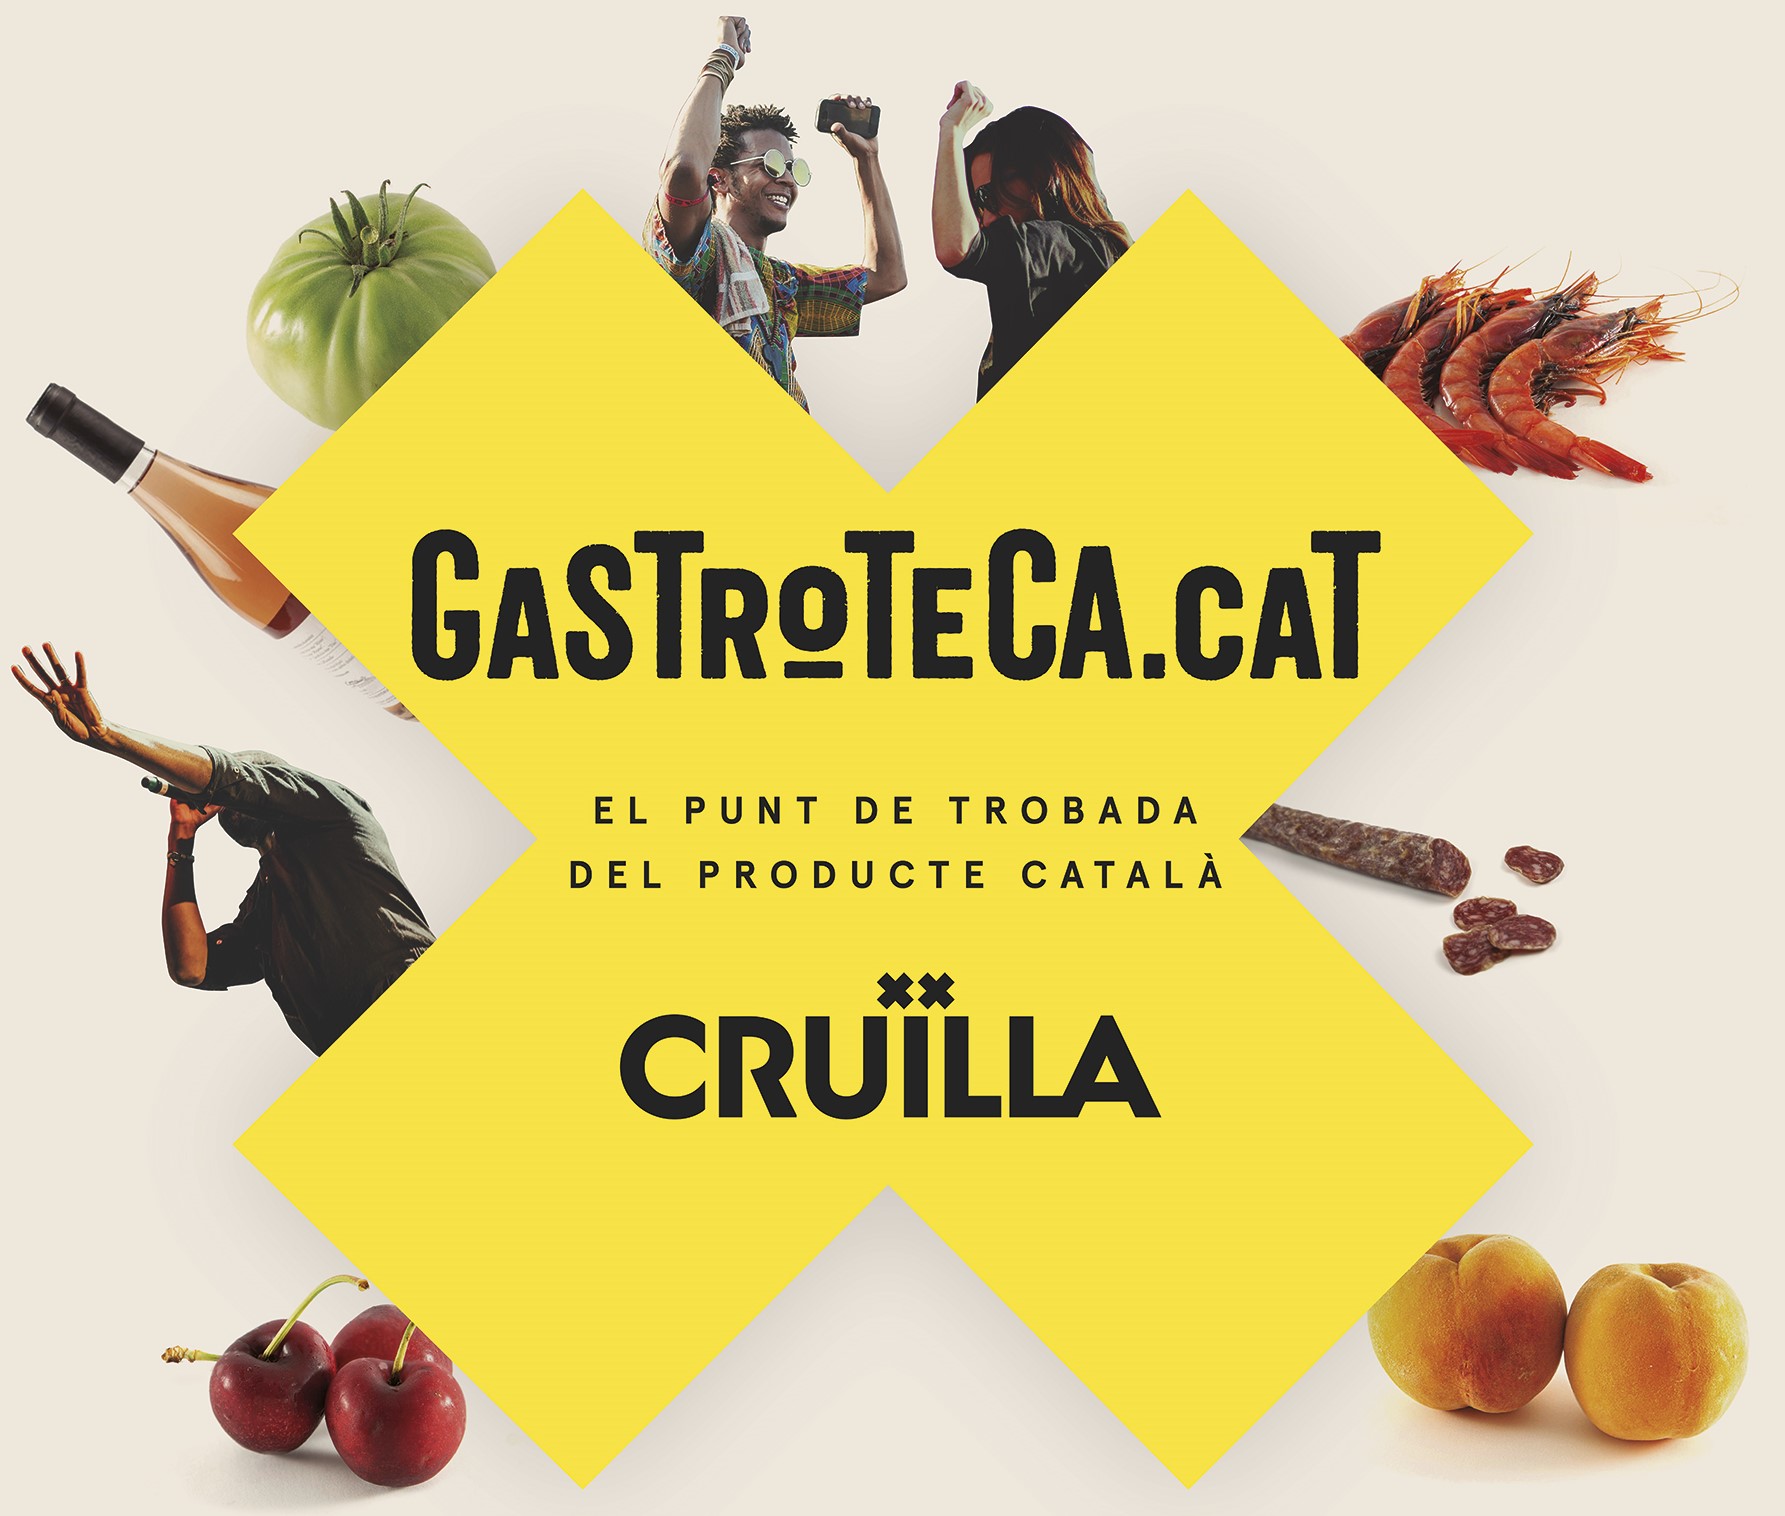 Origin and proximity, headliners of Cruïlla Festival